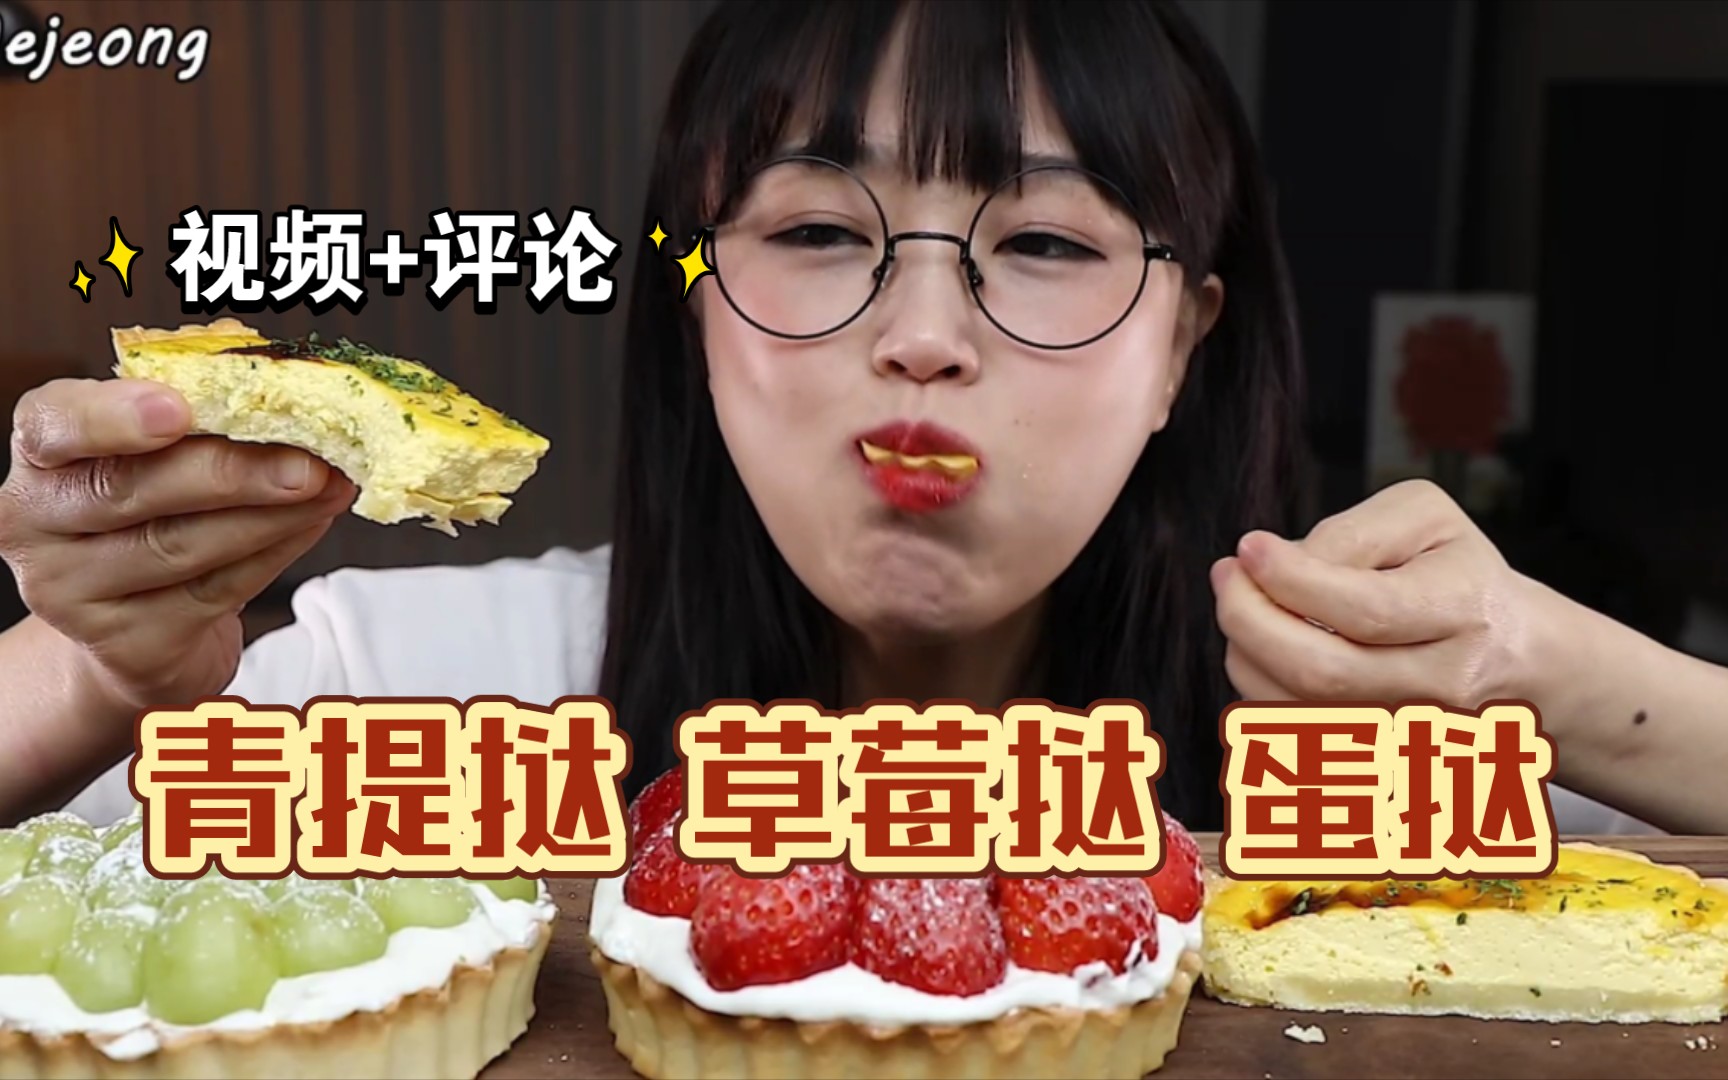 【Aejeong】跑路姐自制生面蛋挞和墙皮水果挞边吃边打胰岛素（附评论）